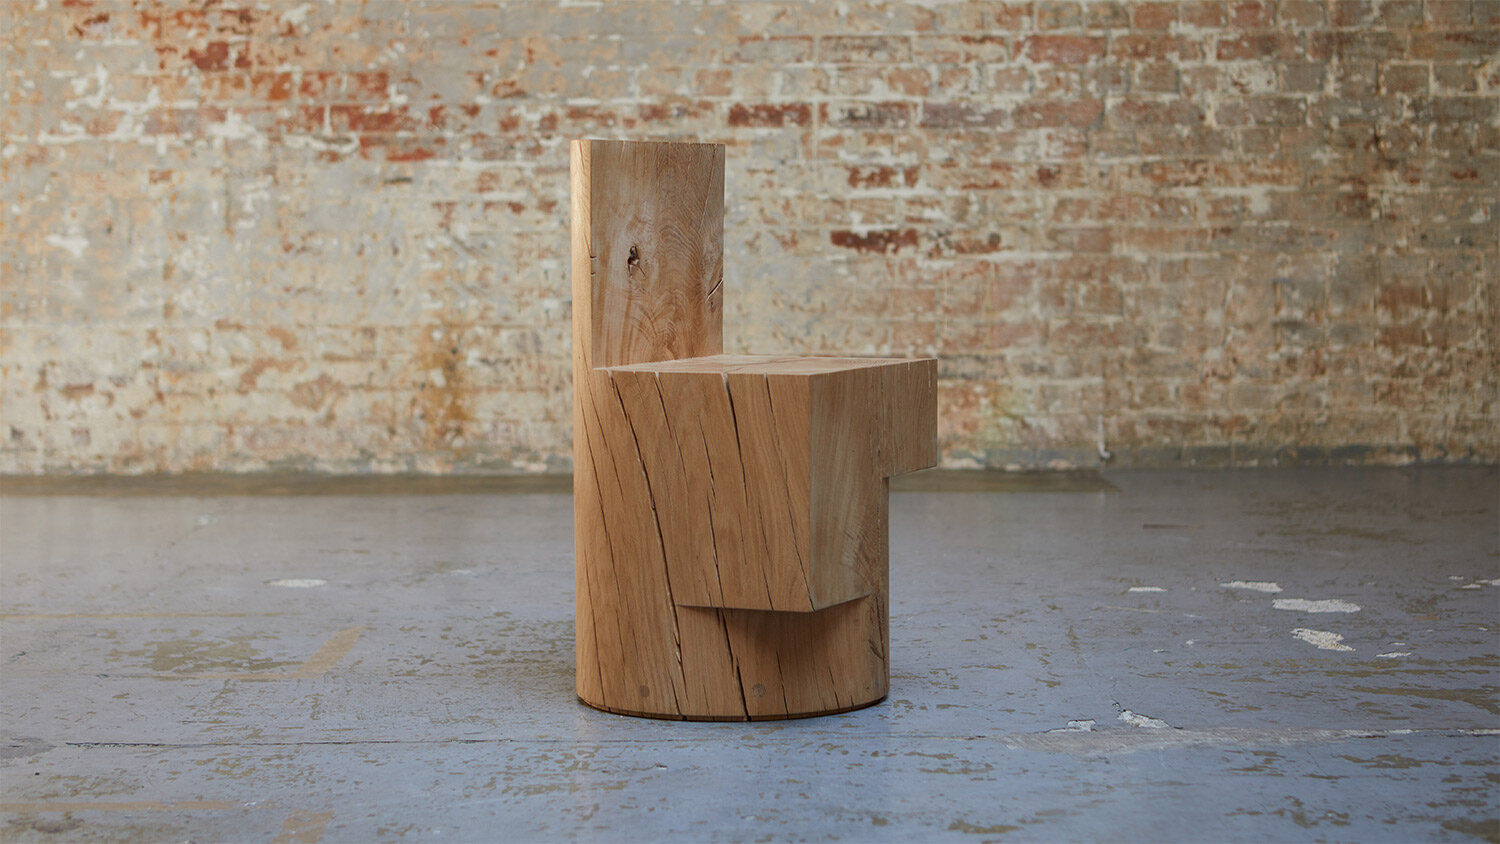 Carved wood chair against brick wall.jpg